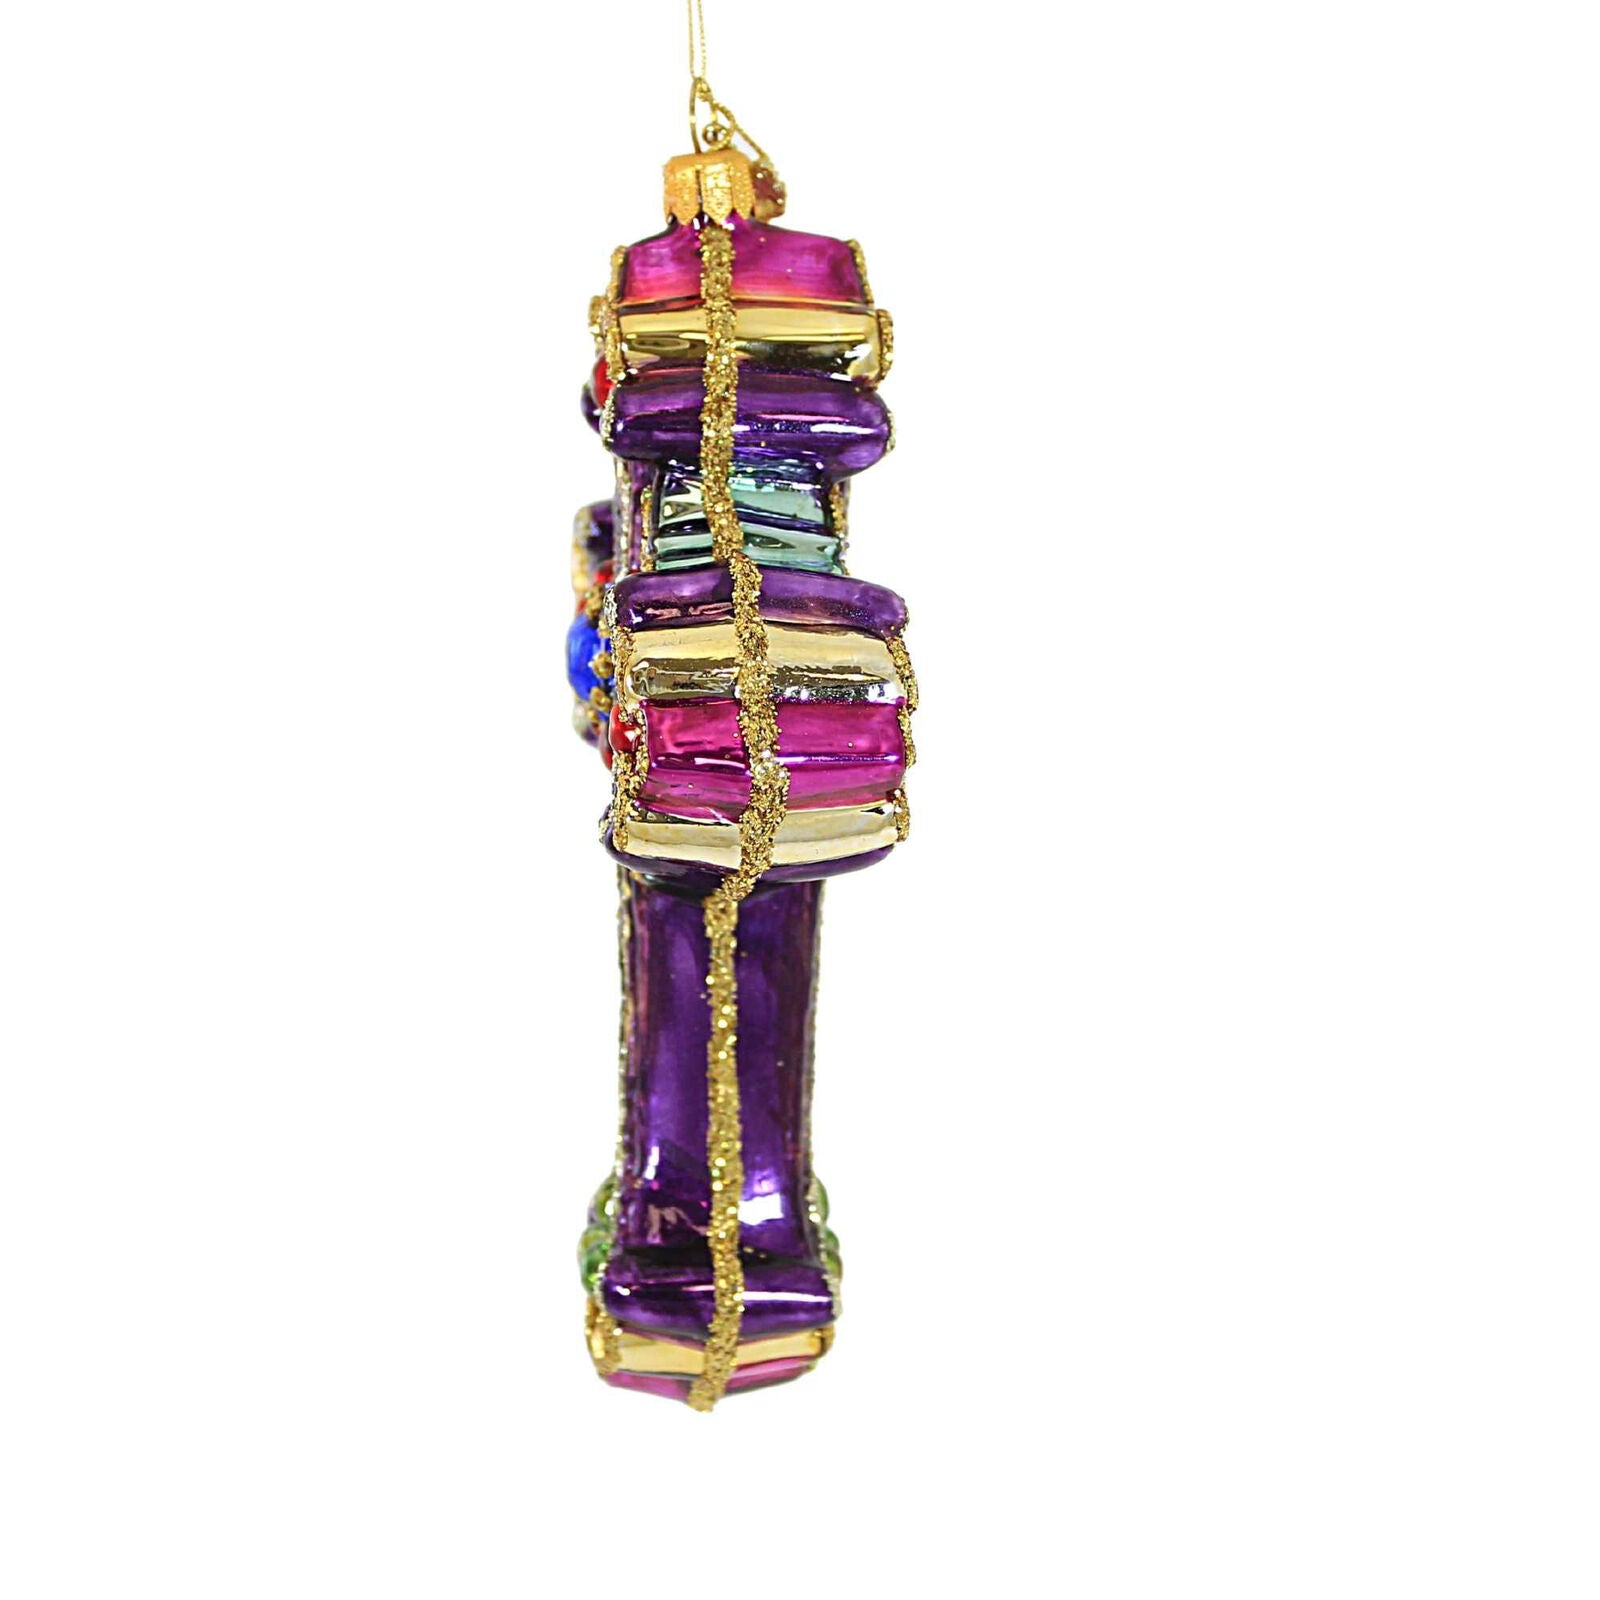 Jeweled Colored Cross Ornament